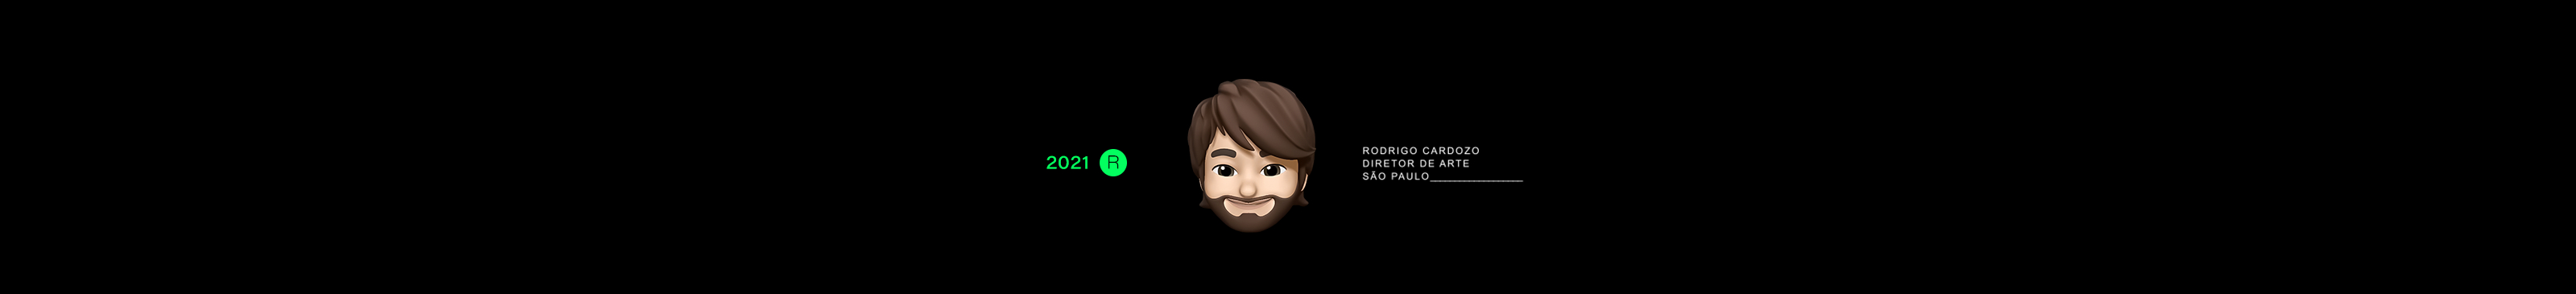 Banner de perfil de Rodrigo Cardozo